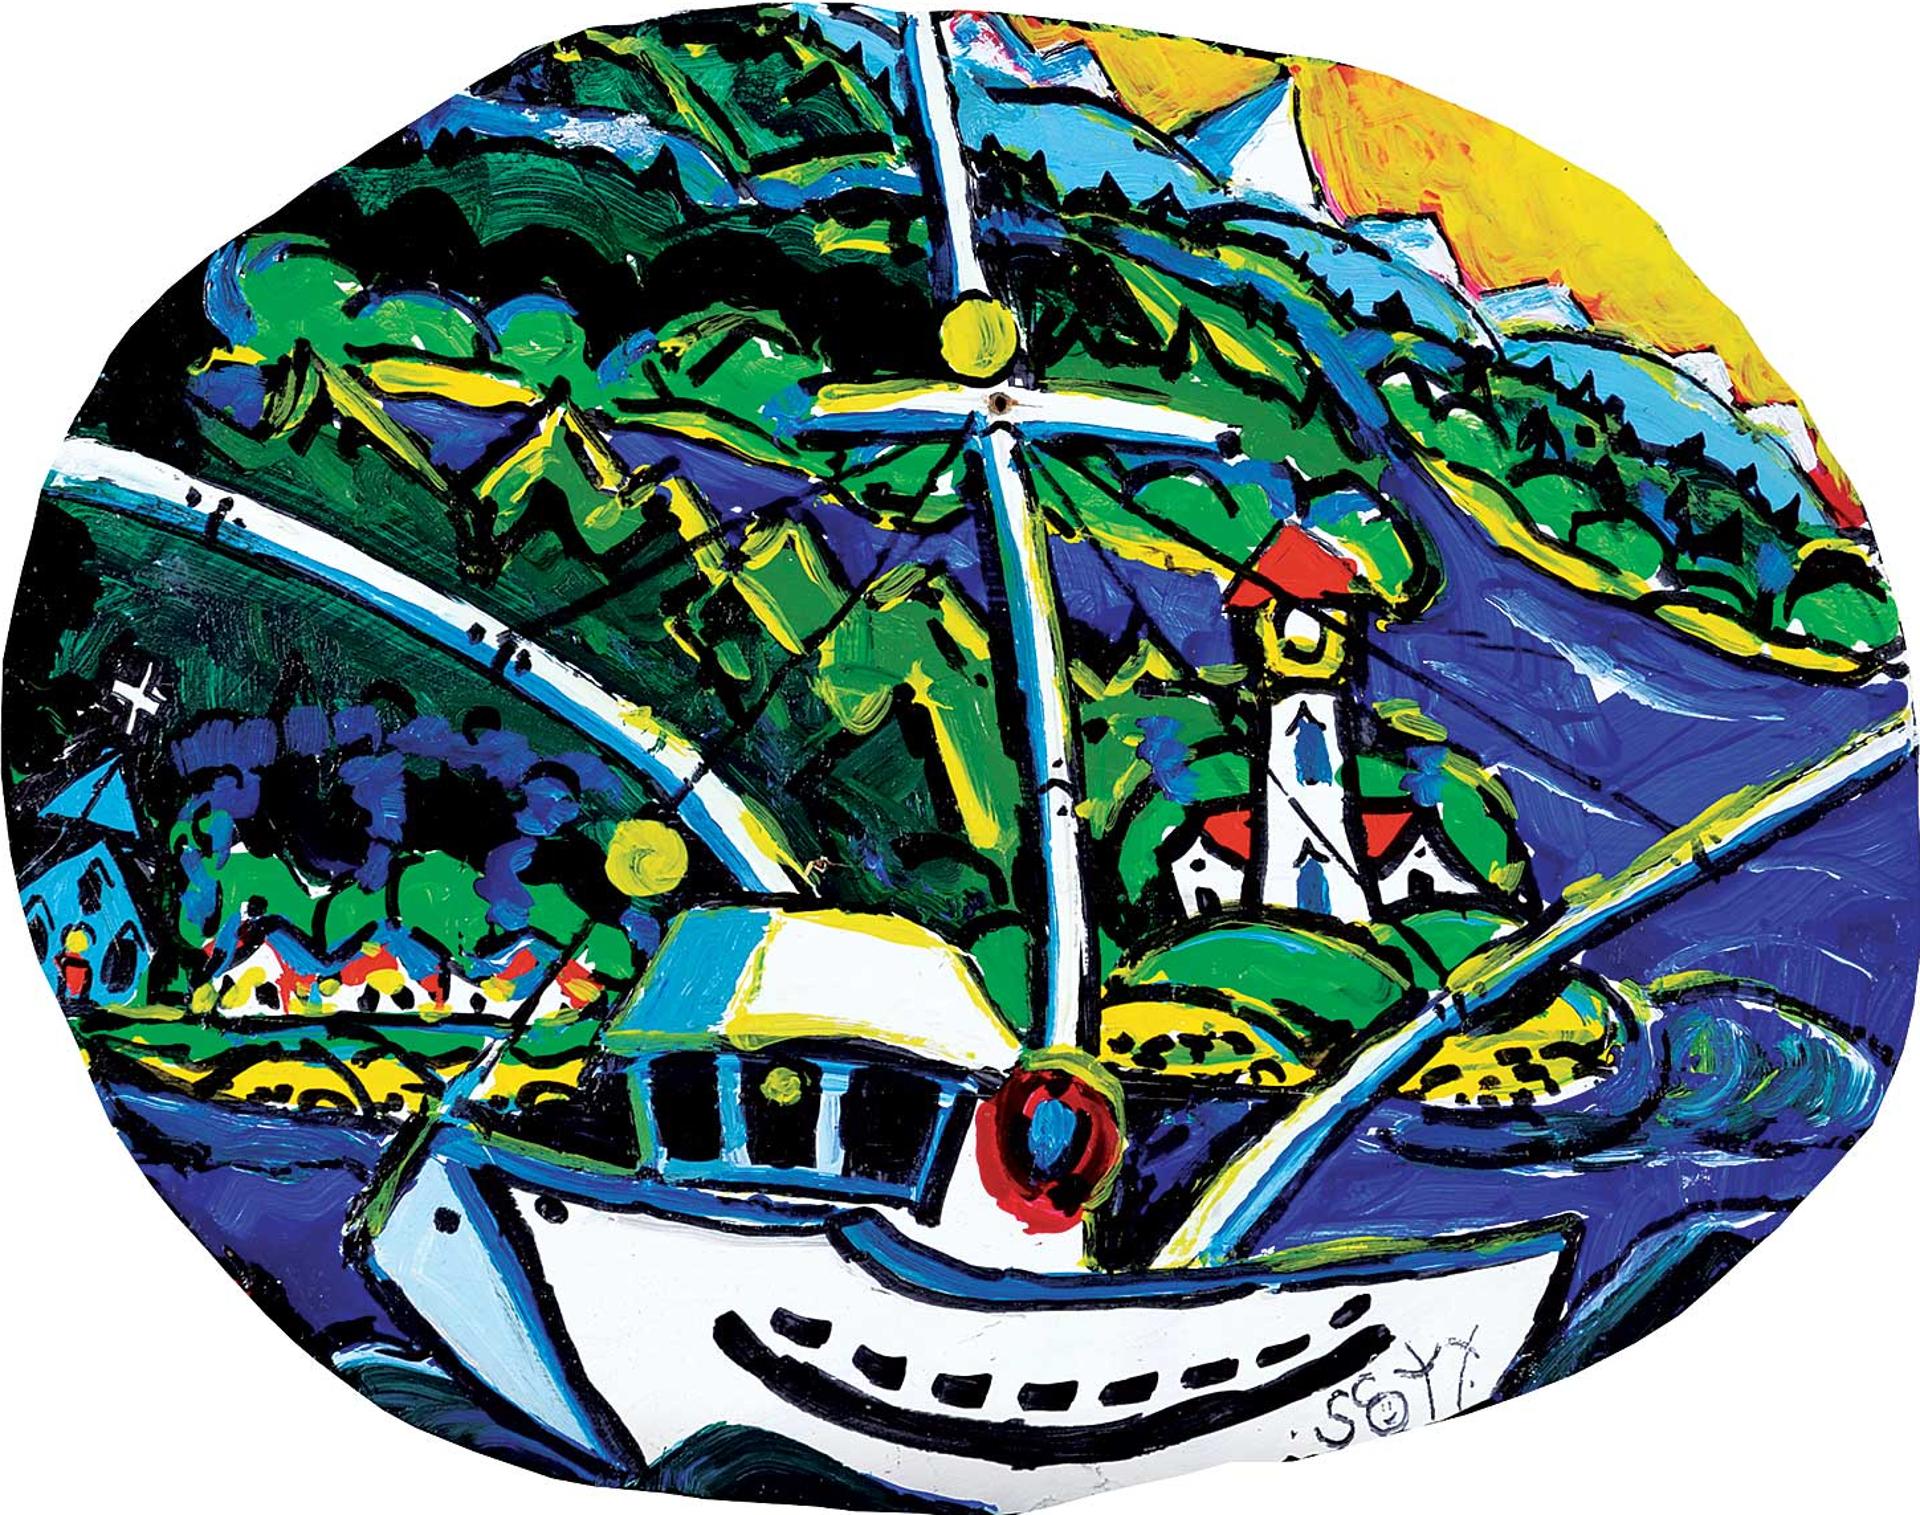 Brian J. Scott (1955) - Fish Boat Cape Mudge